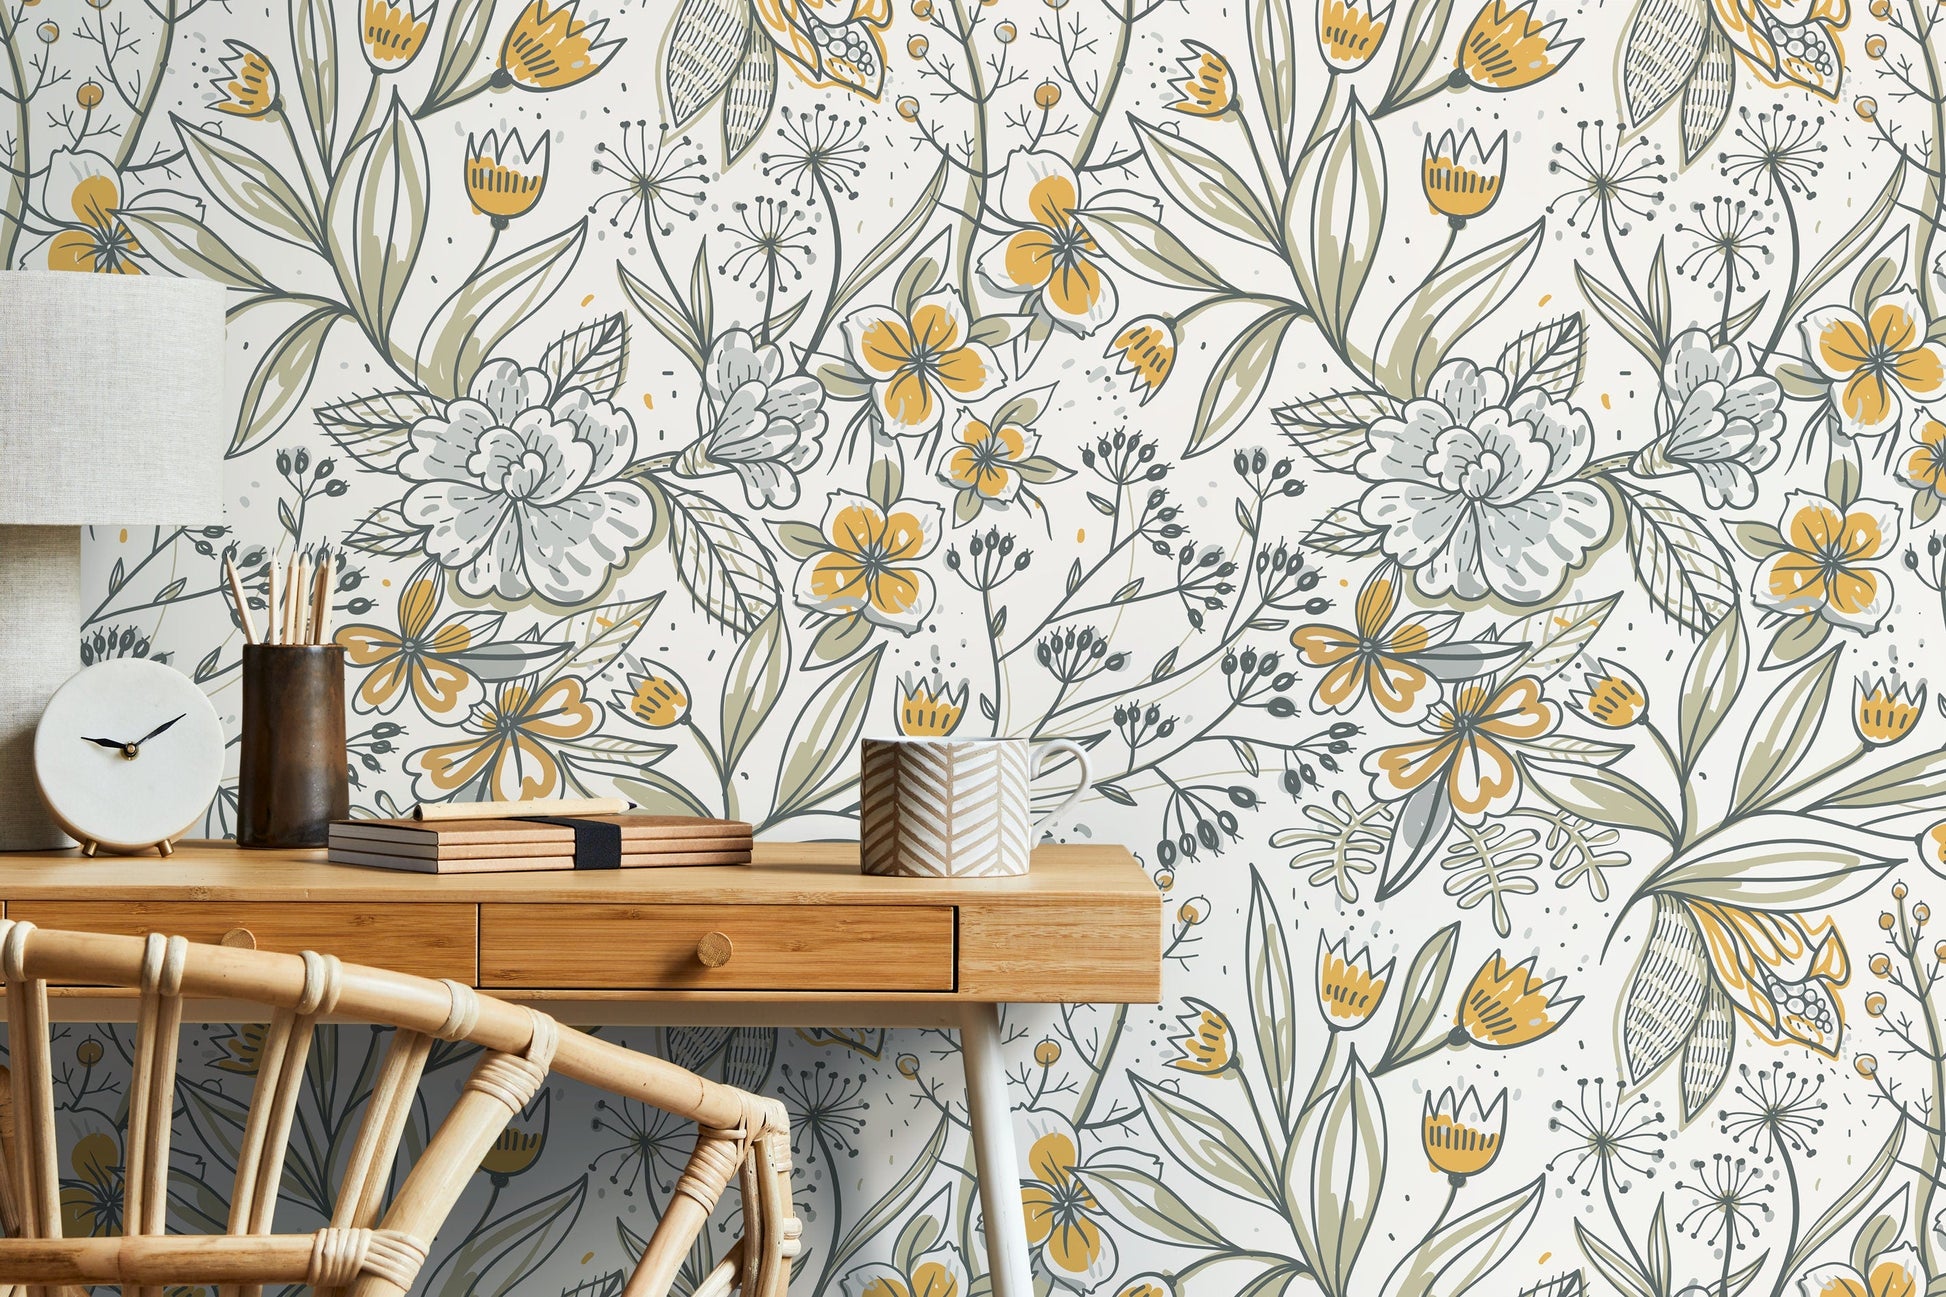 Boho Floral Hand Drawing Wallpaper / Peel and Stick Wallpaper Removable Wallpaper Home Decor Wall Art Wall Decor Room Decor - D140